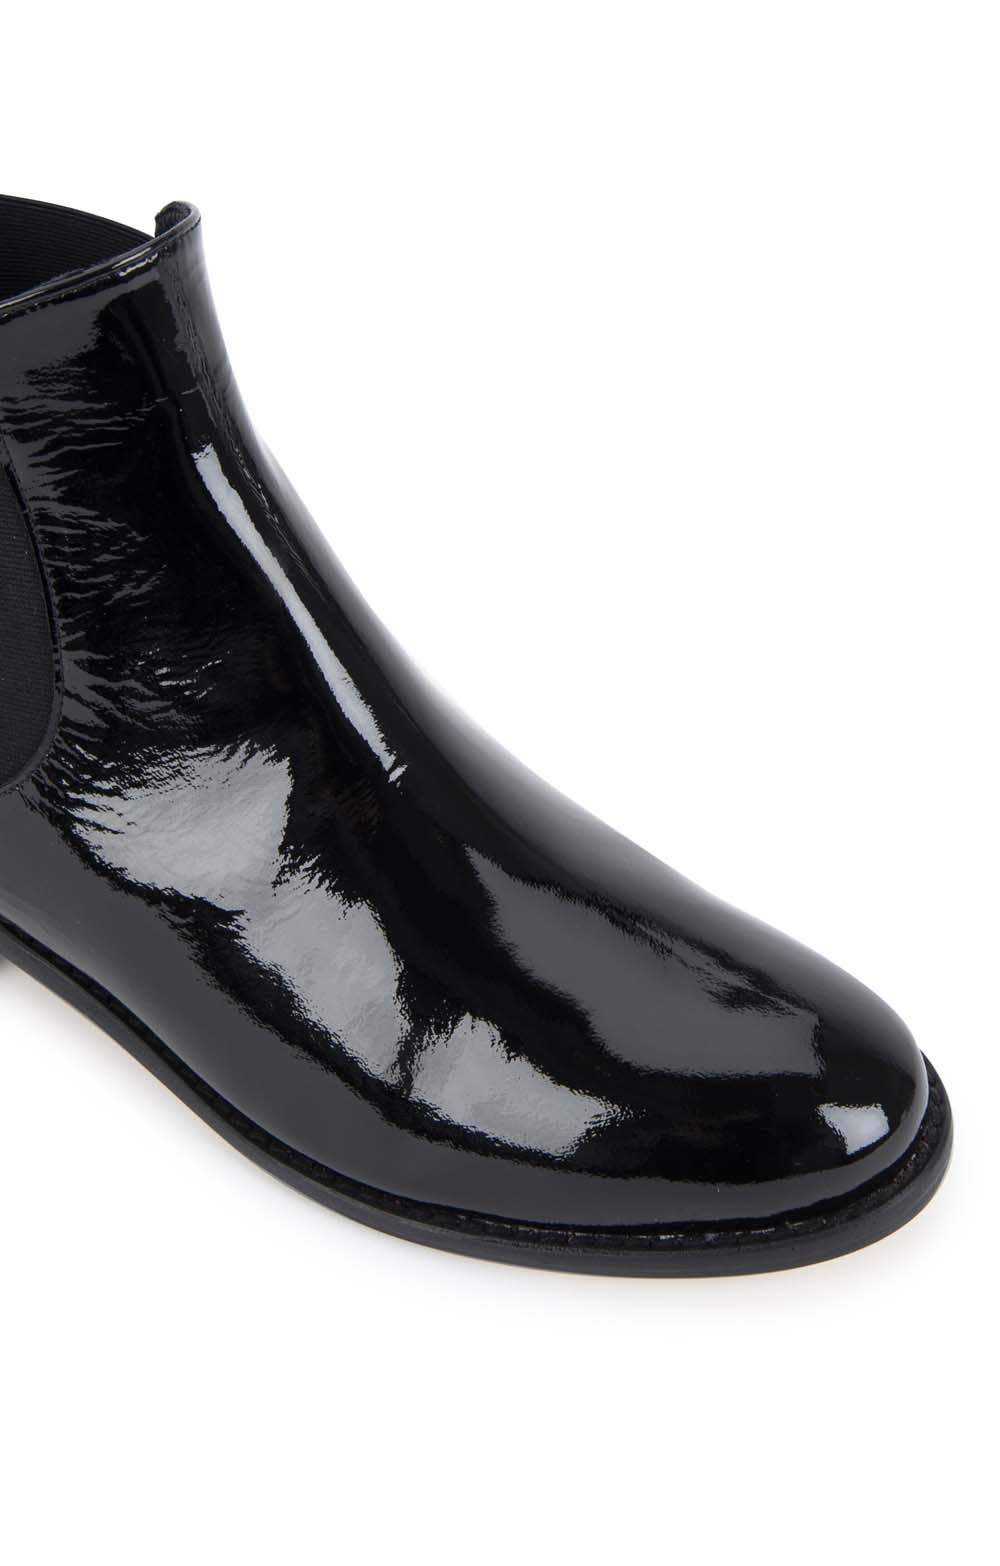 black leather chelsea boot ladies